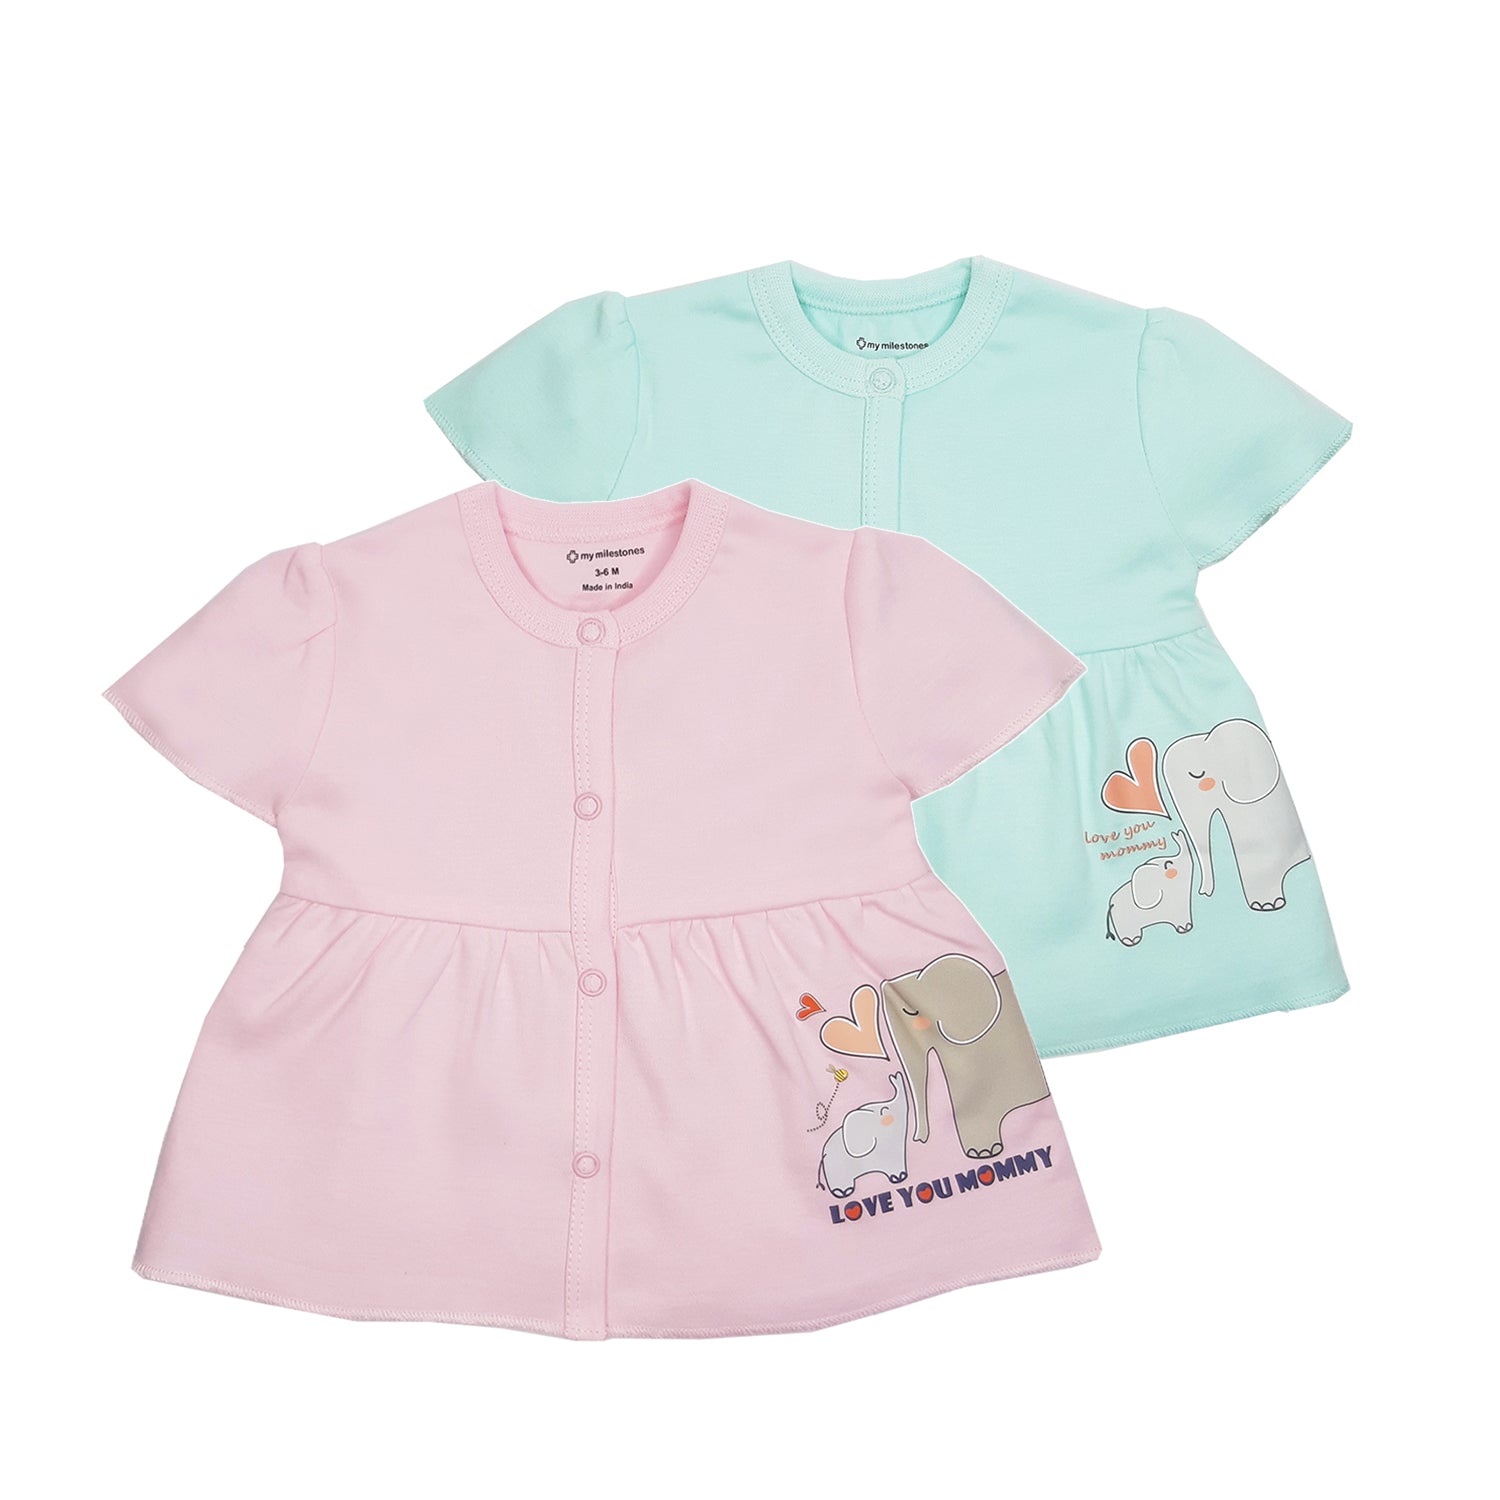 My Milestones T-shirt Half Sleeves Girls Pink / Aqua - 2 Pc Pack